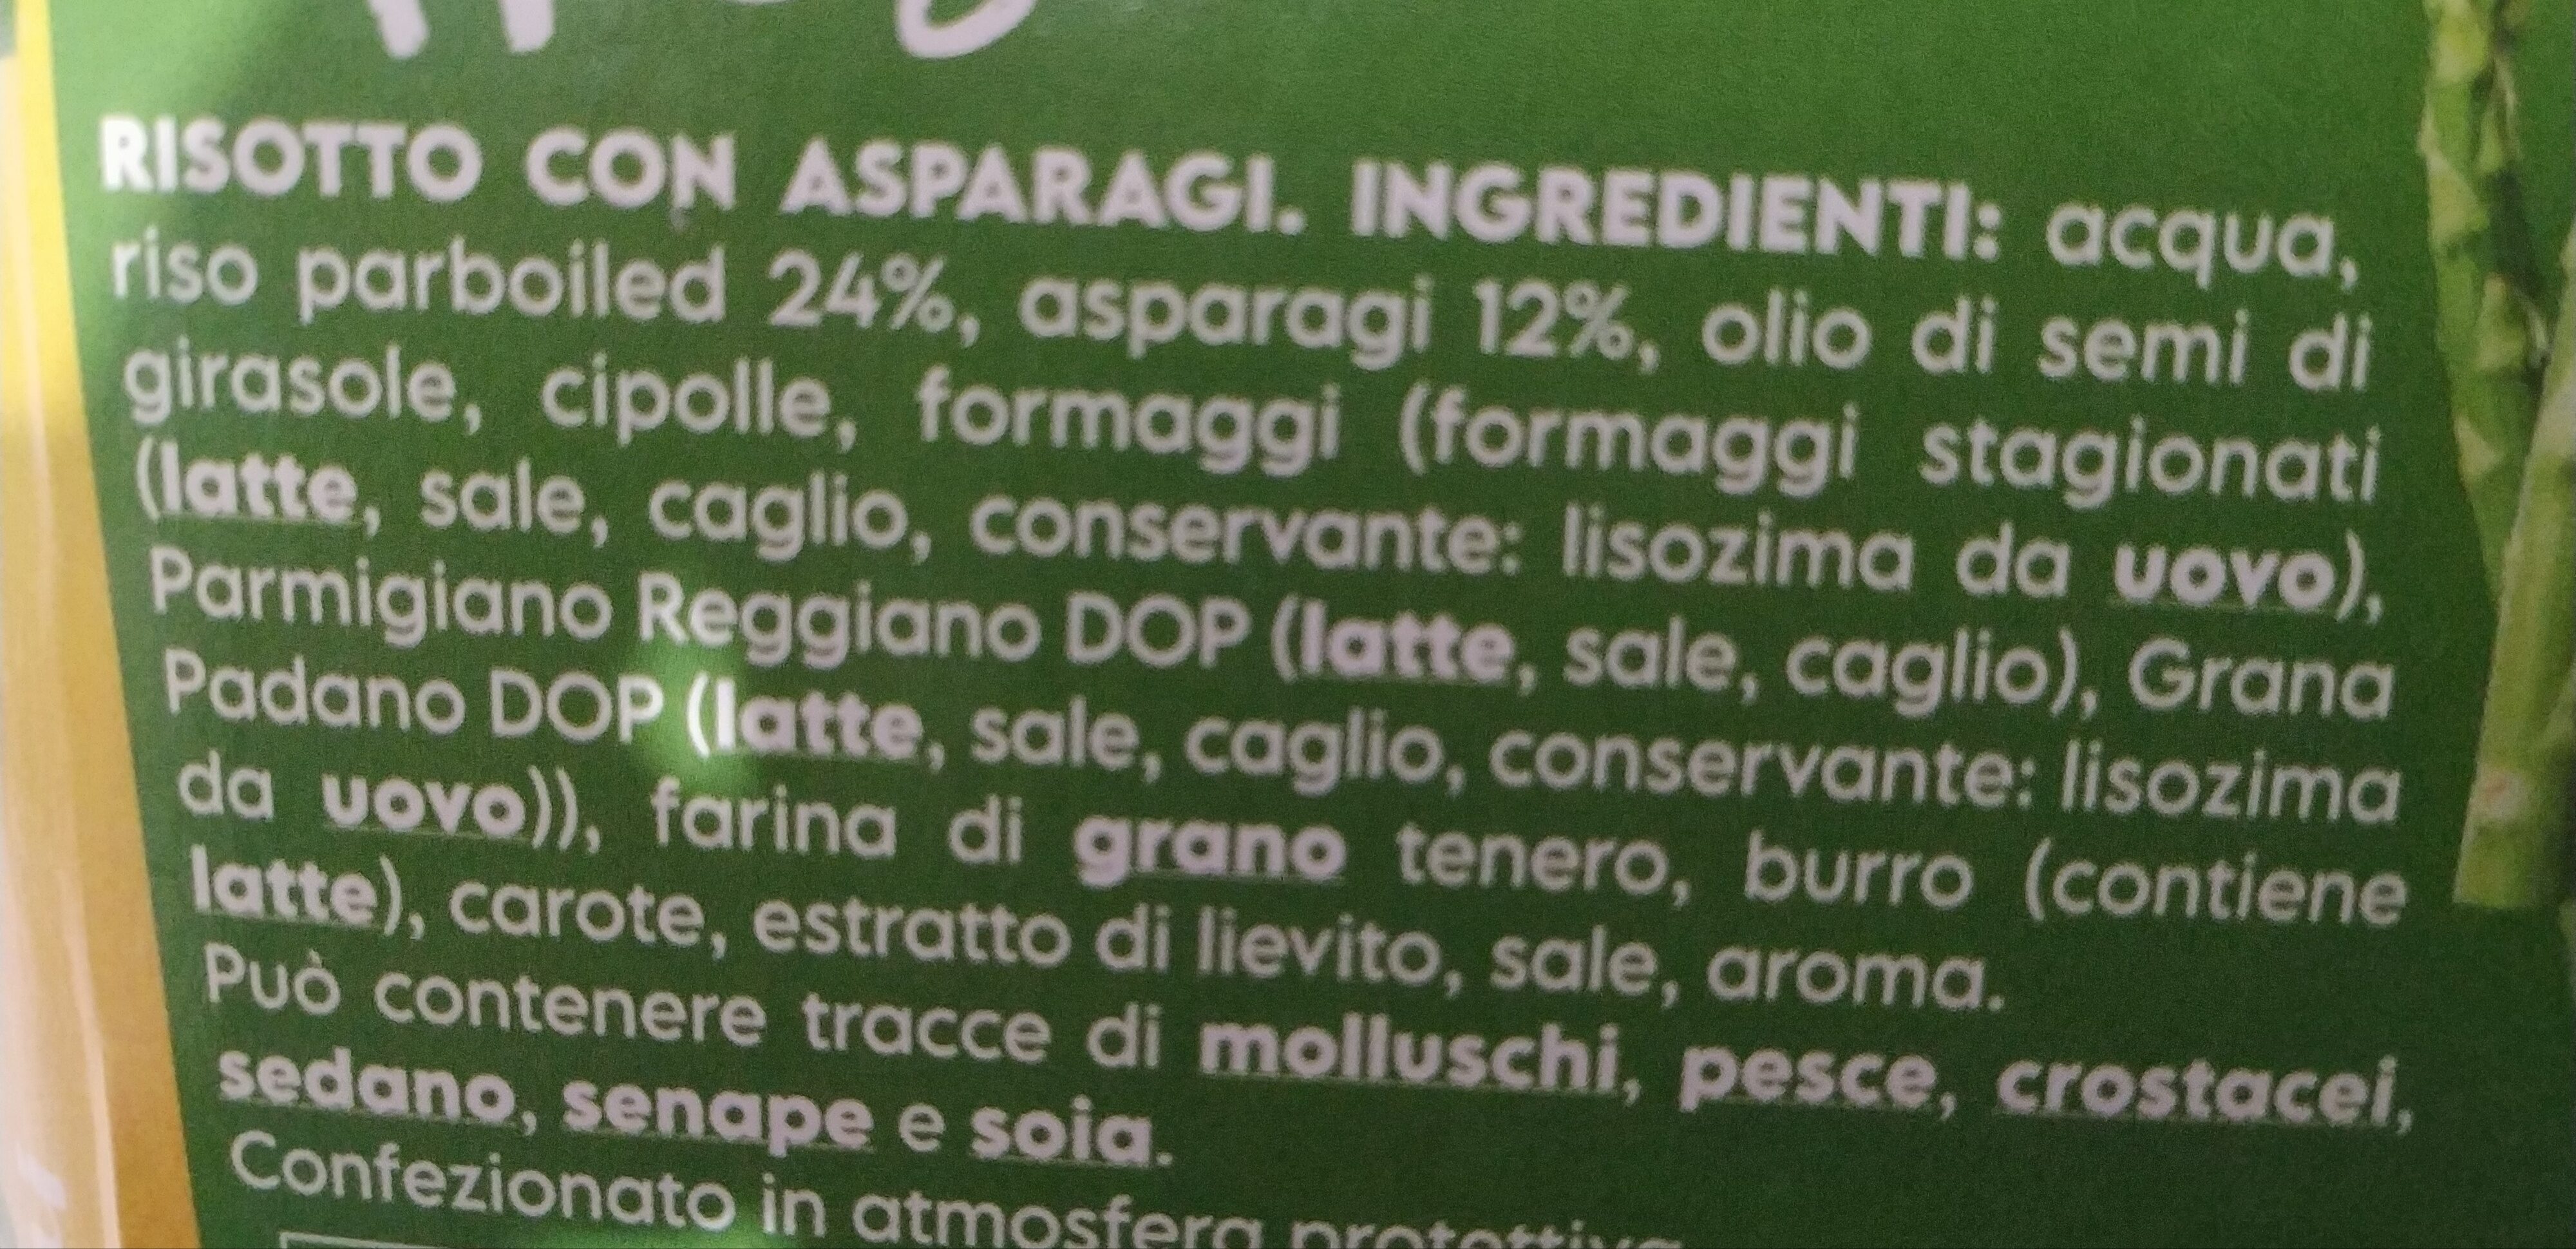 Risotti freschi agli asparagi - Ingredienti